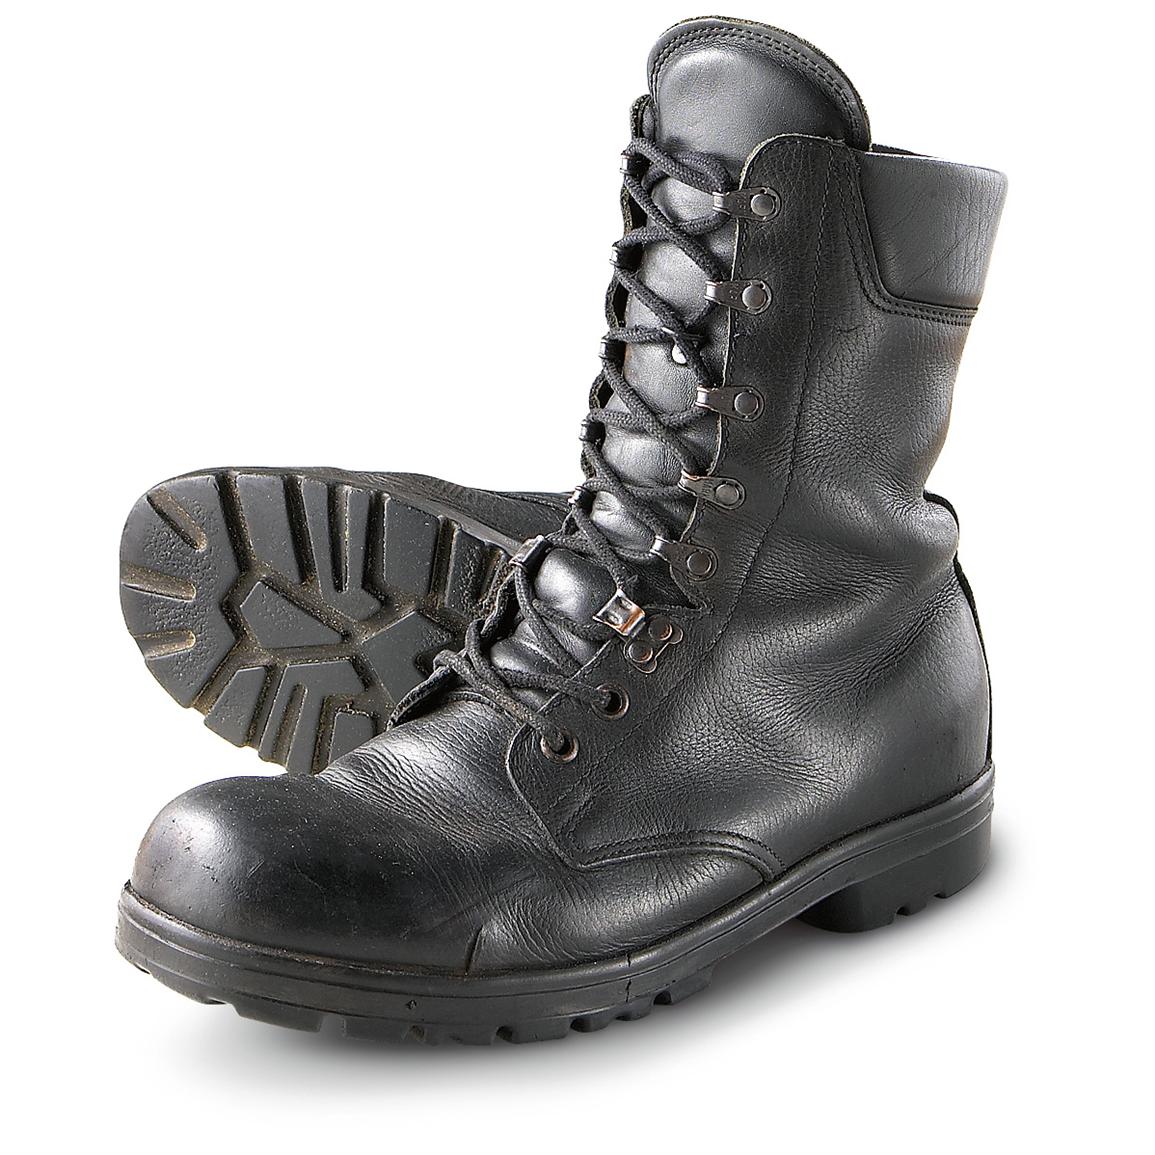 used black combat boots